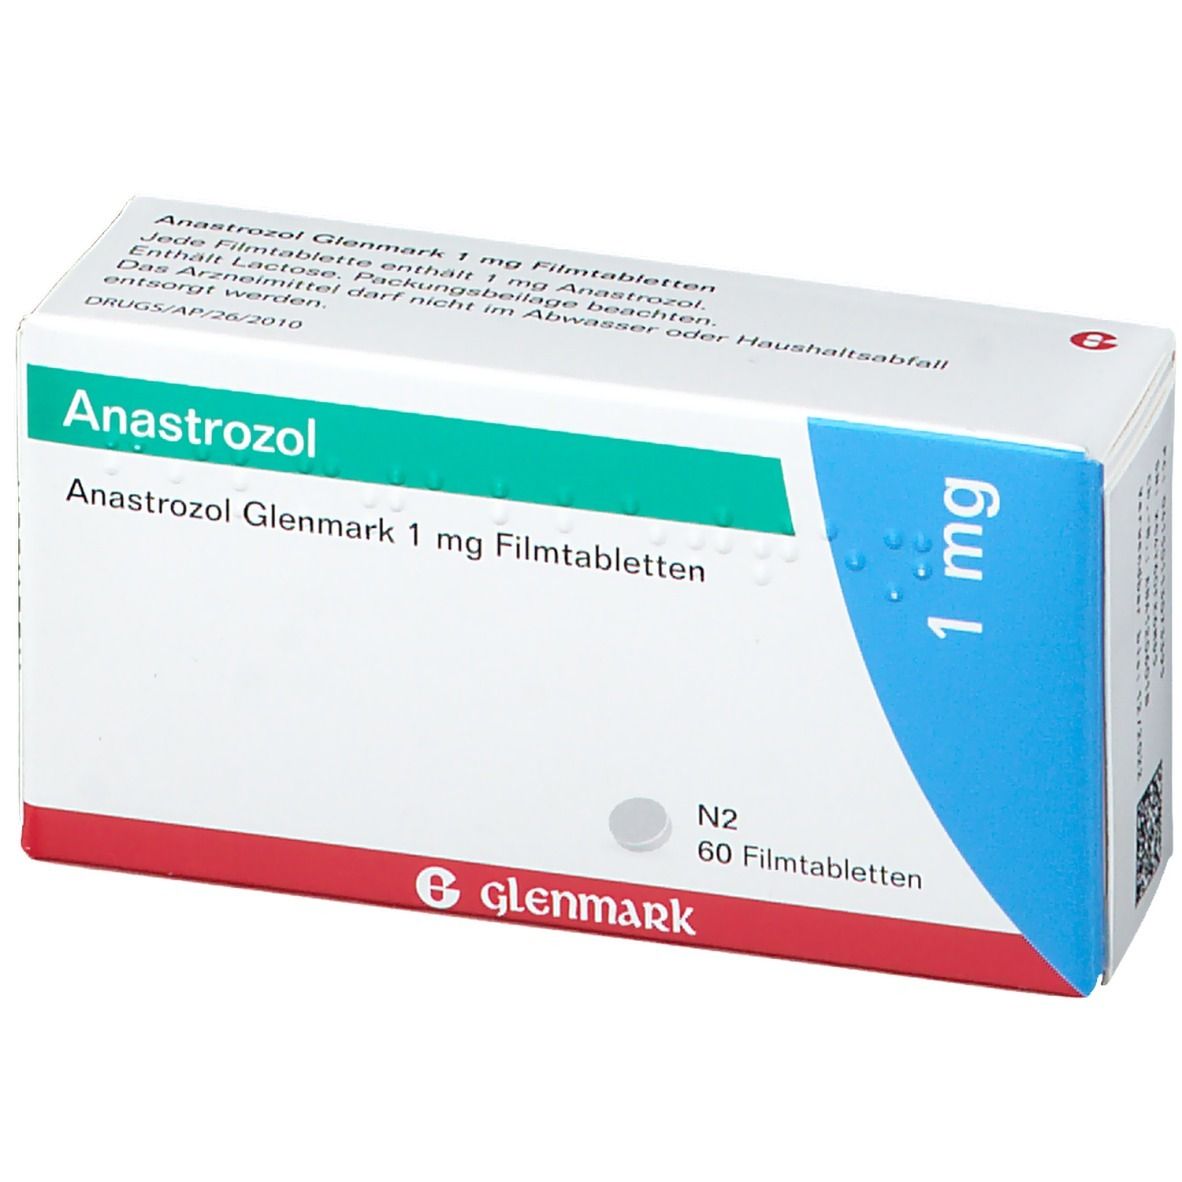 Anastrozol Glenmark 1 mg